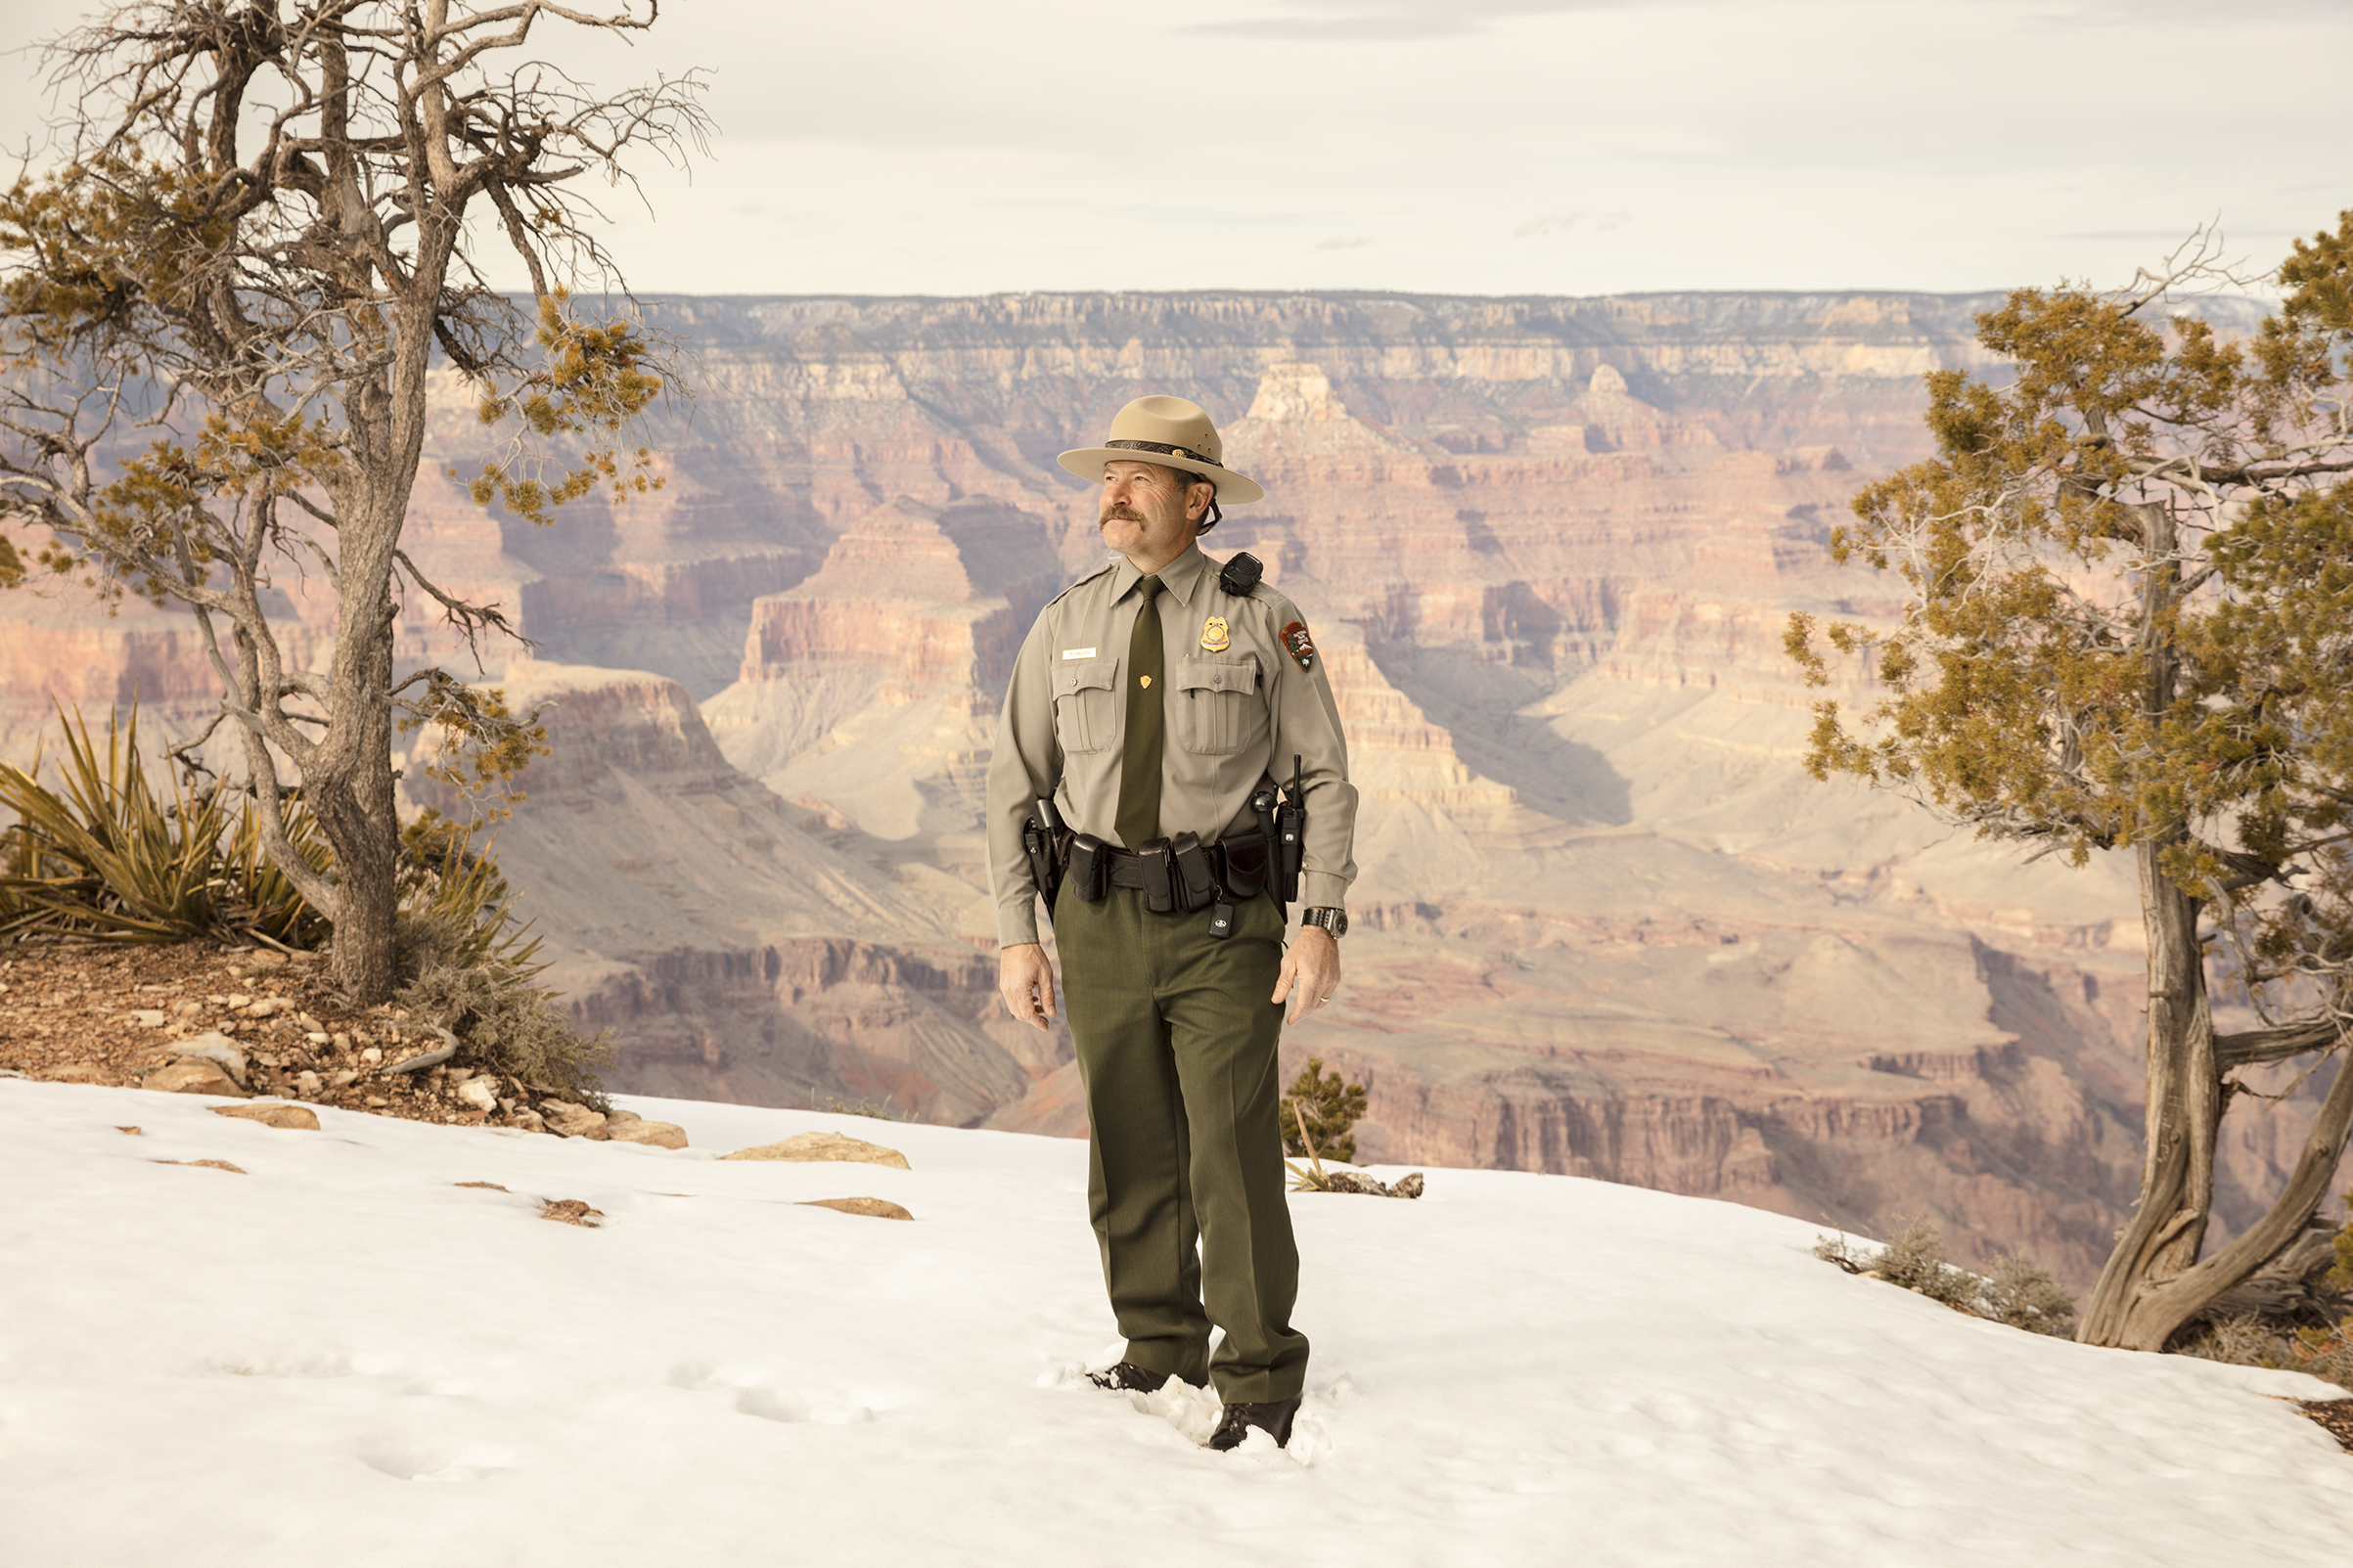 Grand Canyon Chief Ranger Matthew Vandzura Time With